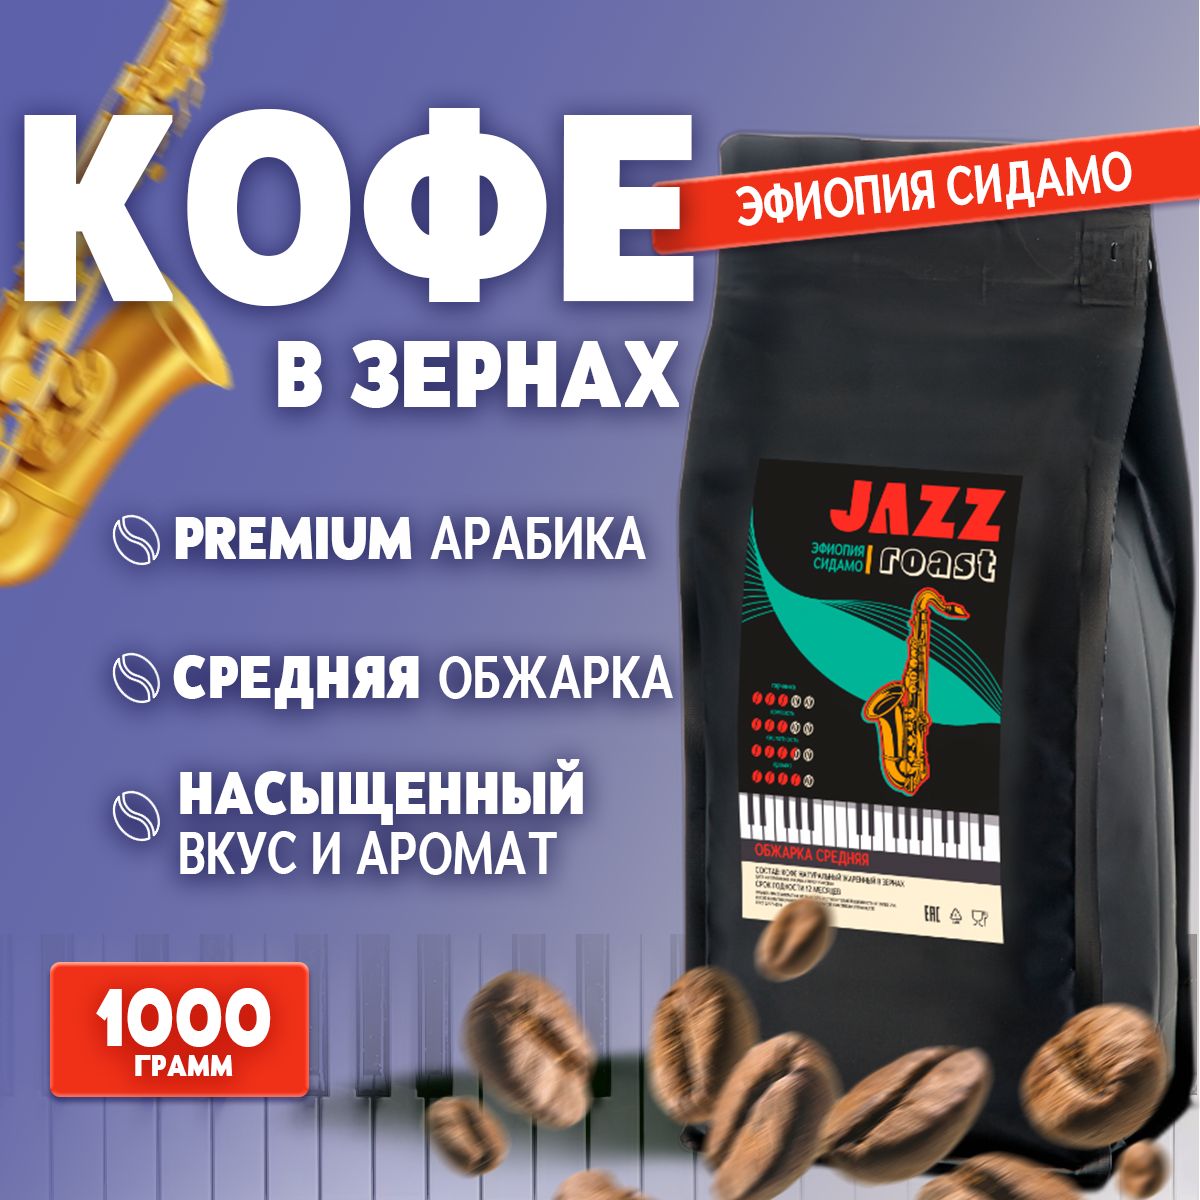 Jazz Roast | Кофе в зернах Эфиопия Сидамо Jazz Roast, 100% арабика, свежая обжарка, 1 кг